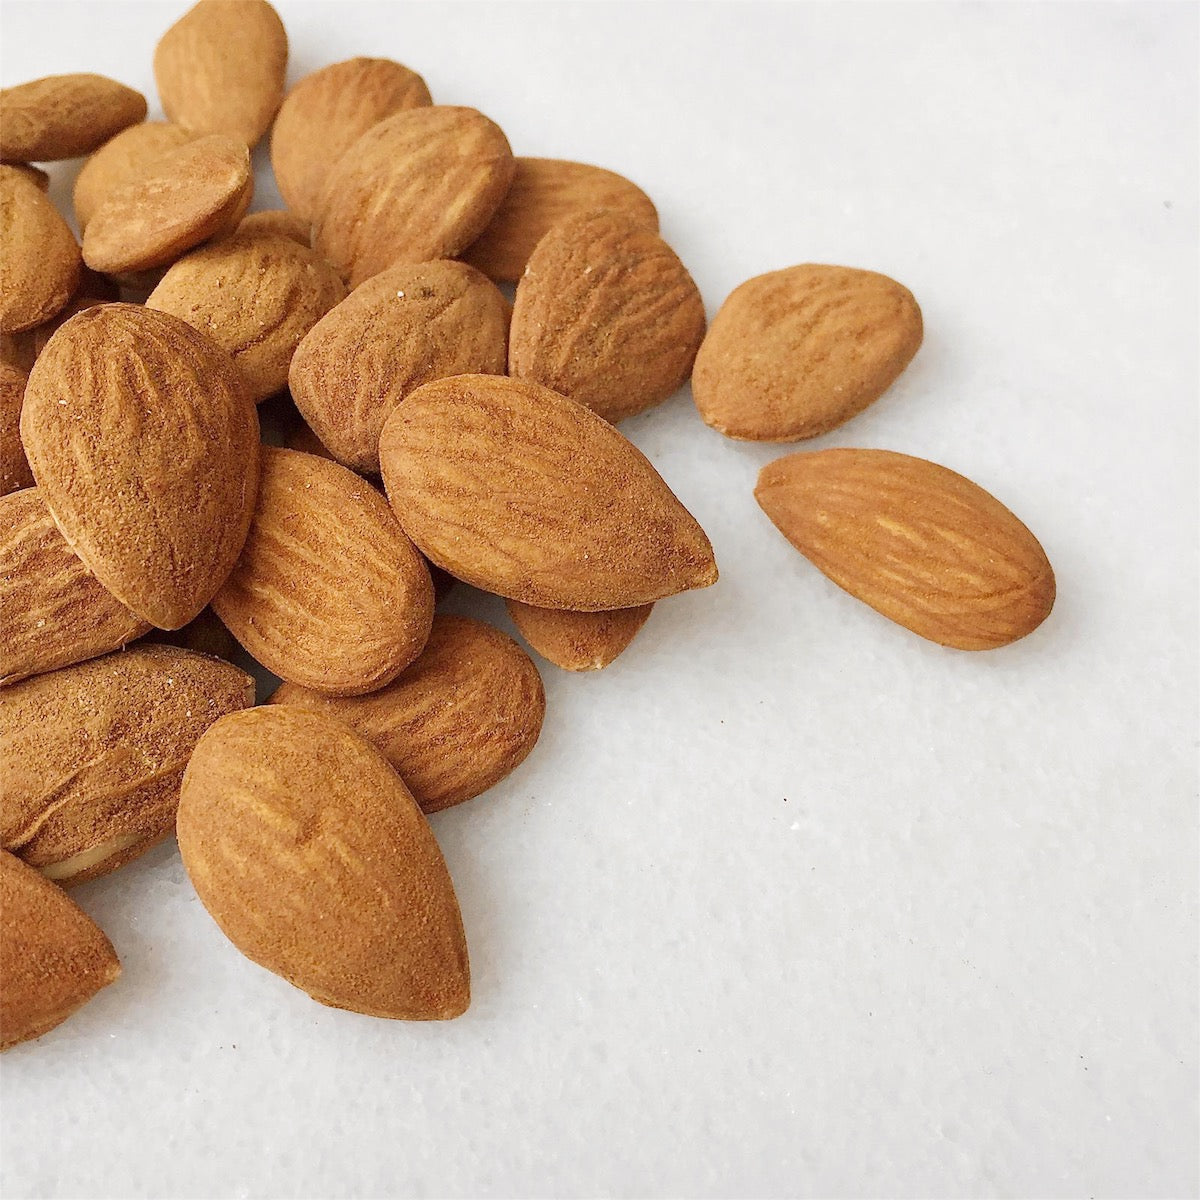 raw unpasteurized almonds